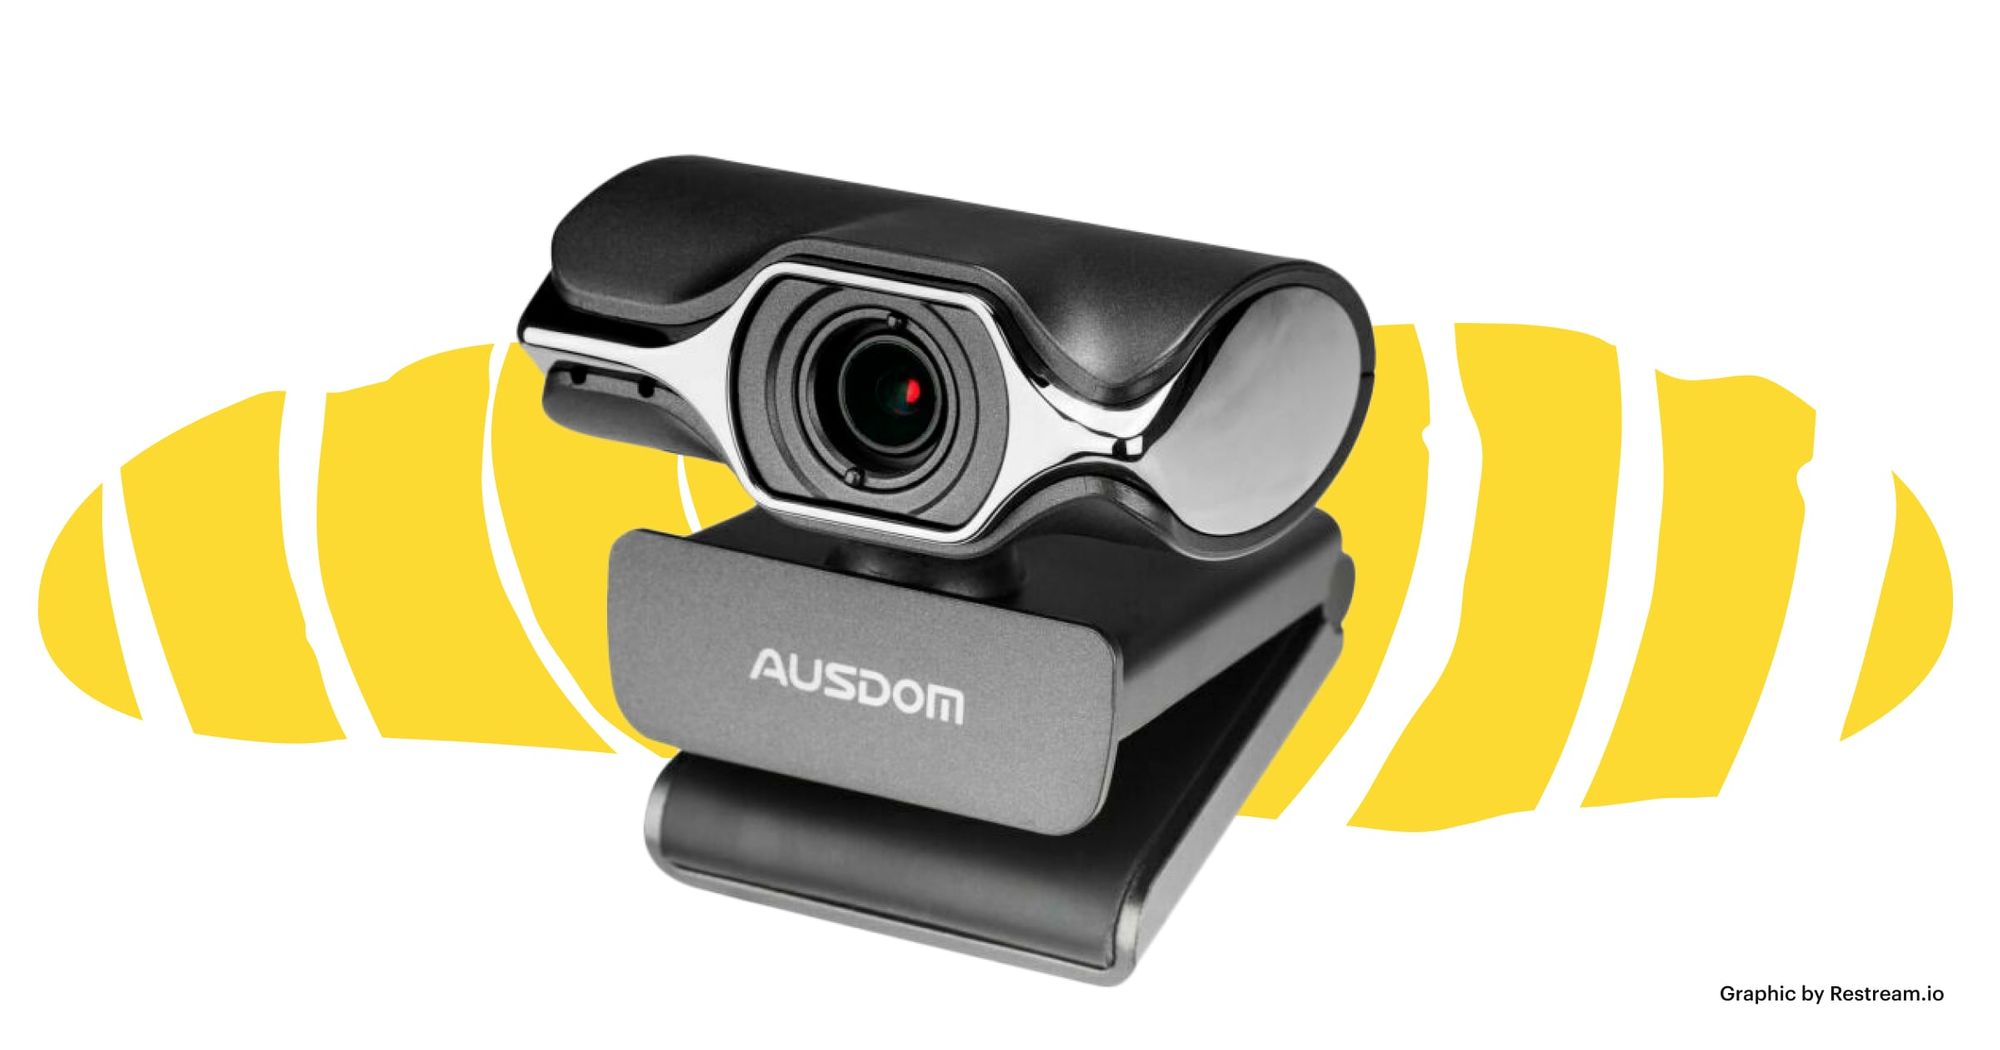 best webcam camera for mac pro 2013